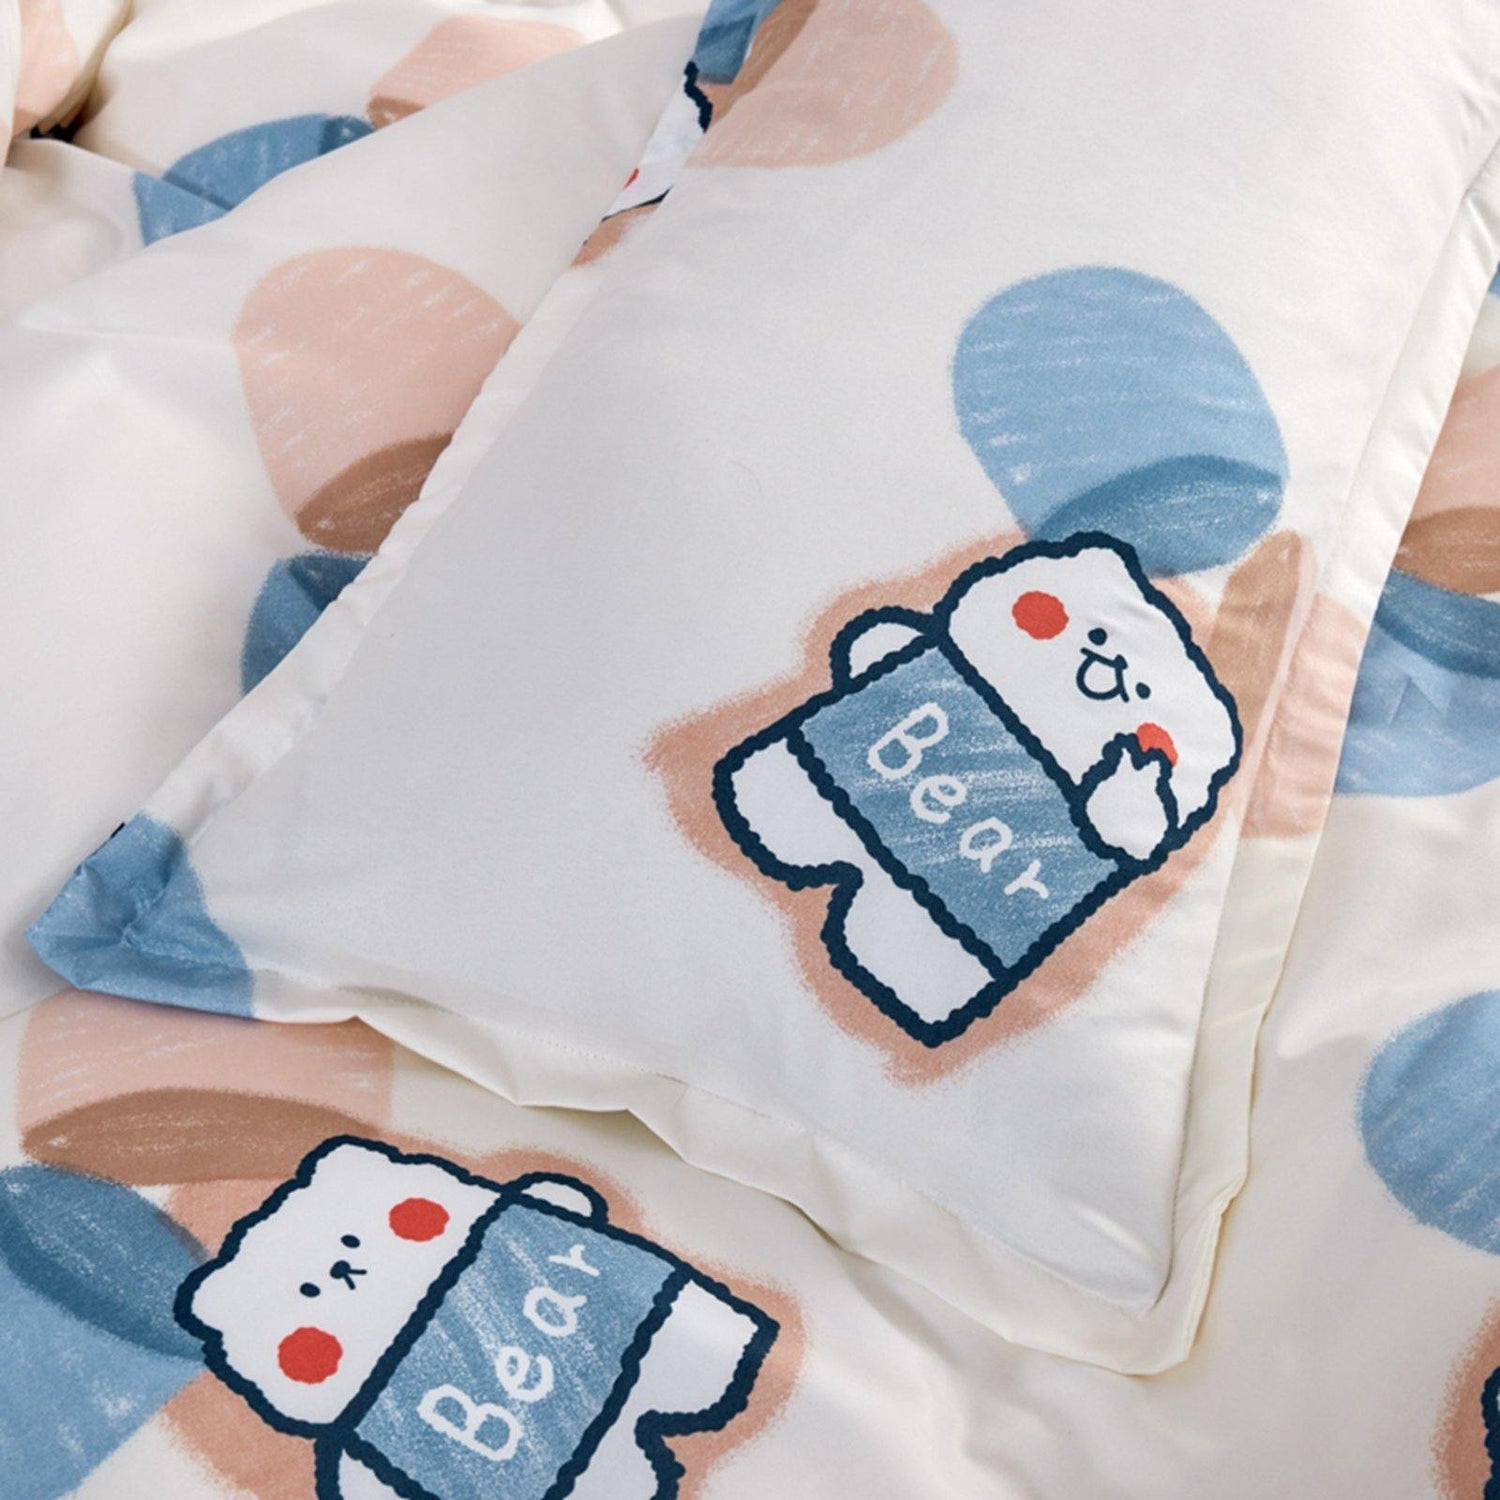 WONGS BEDDING Cute Style Duvet Cover Set - Wongs bedding